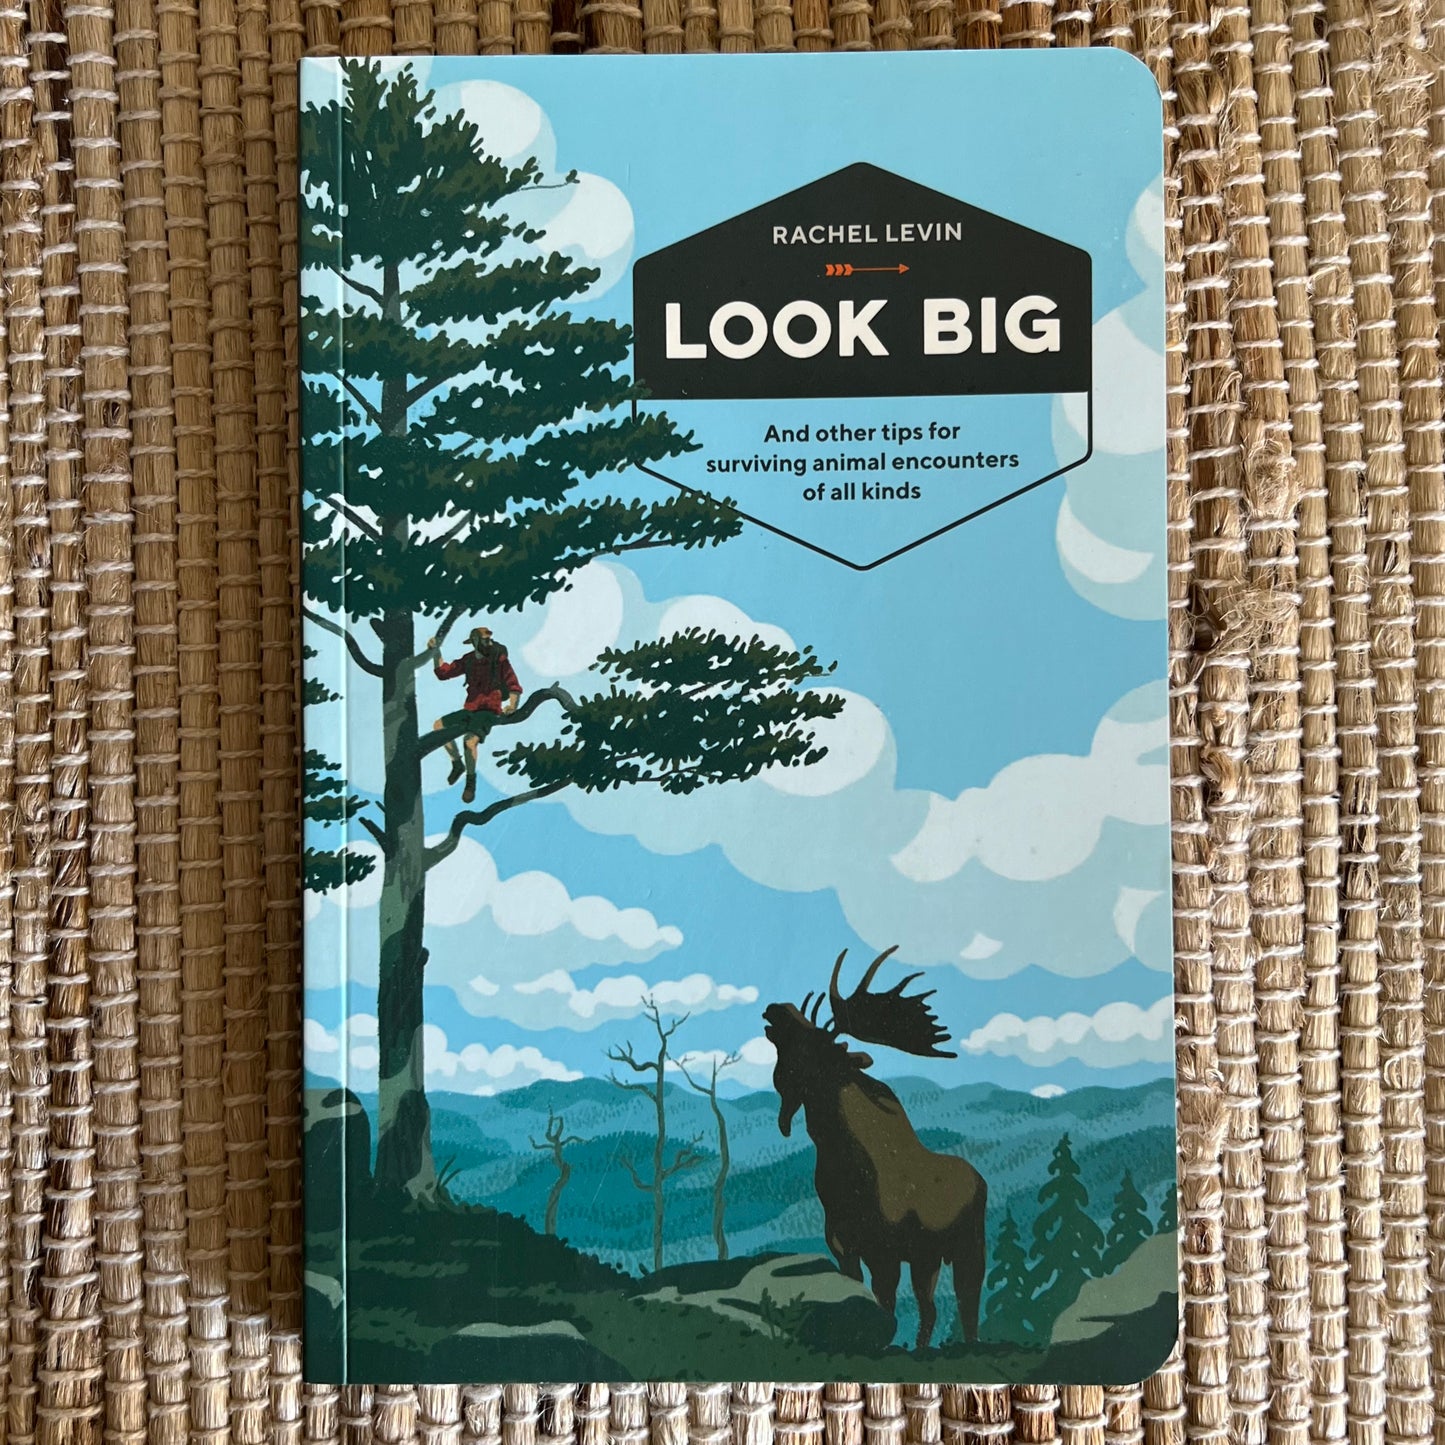 Look Big by Rachel Levin